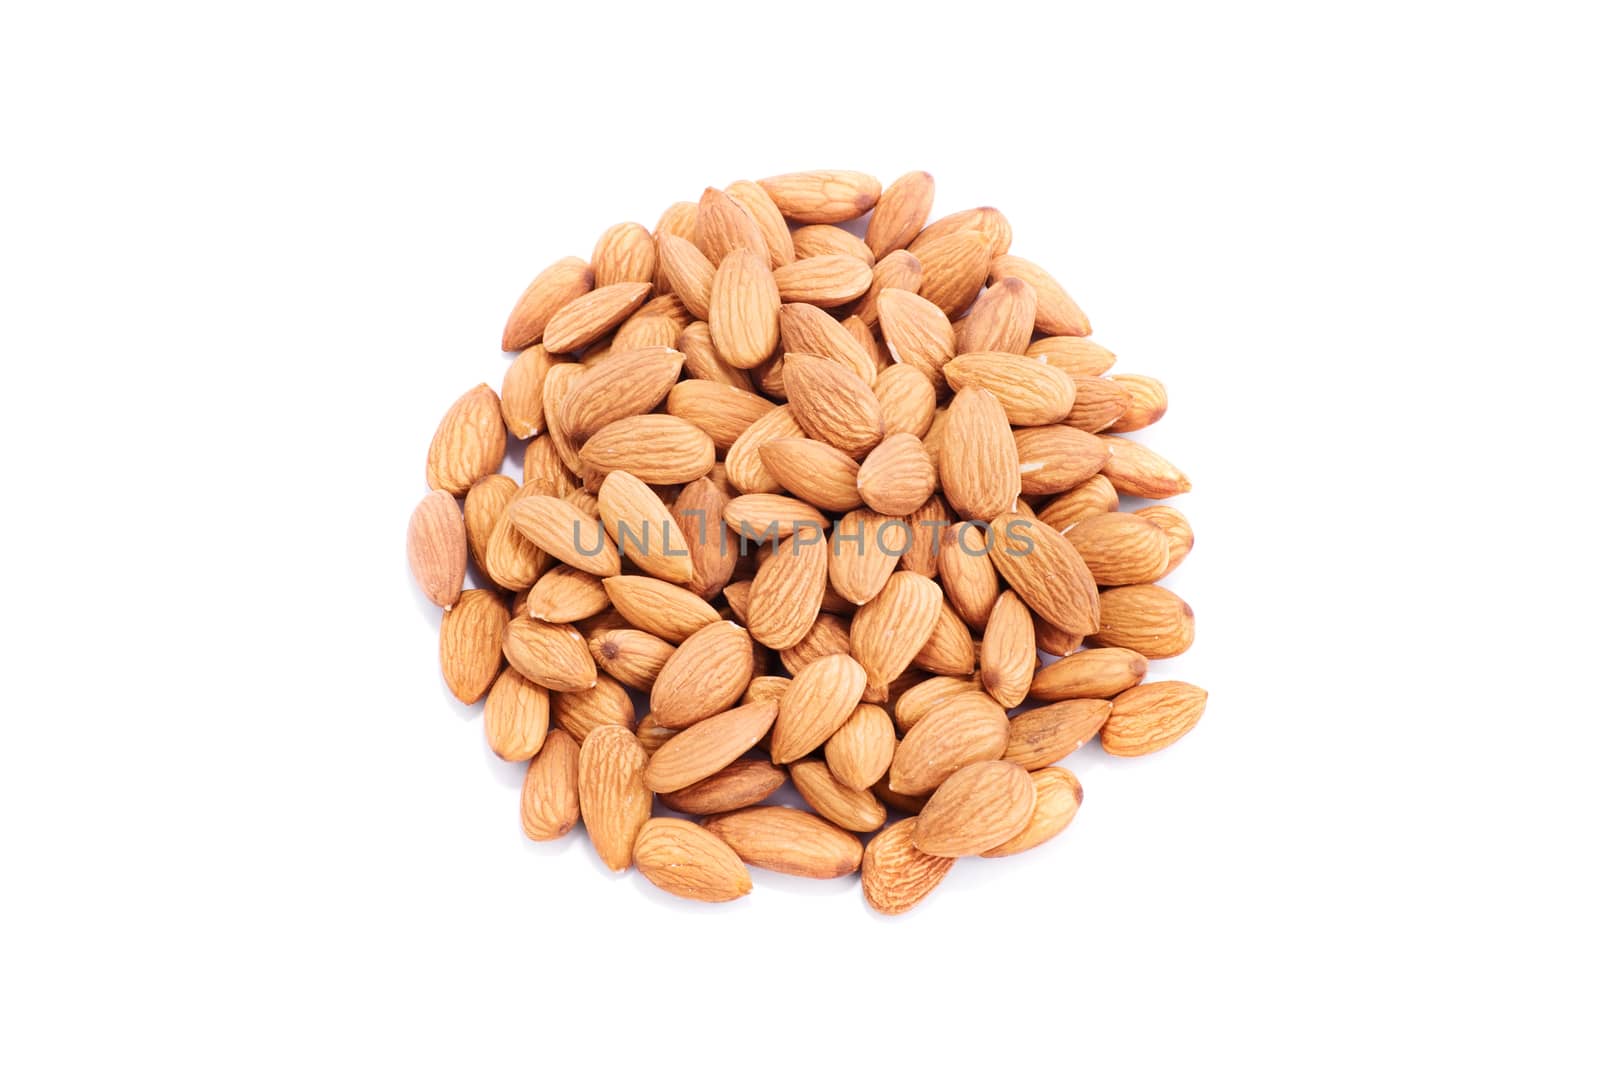 Heap of almonds by Mendelex